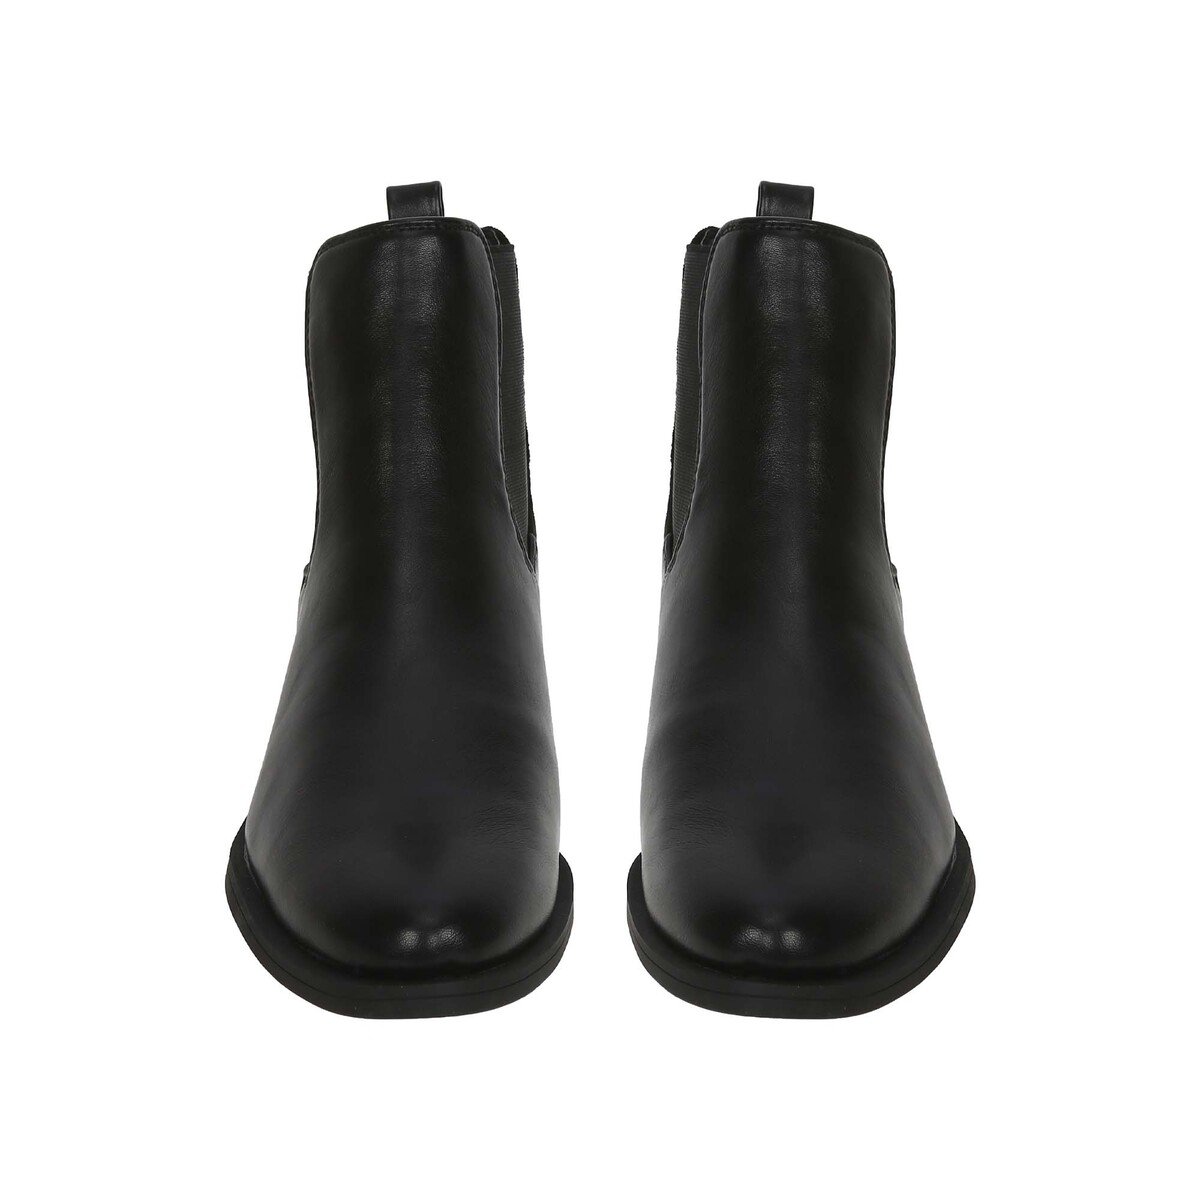 Eten Women's Fashion Boots B8058-2 Black, 41